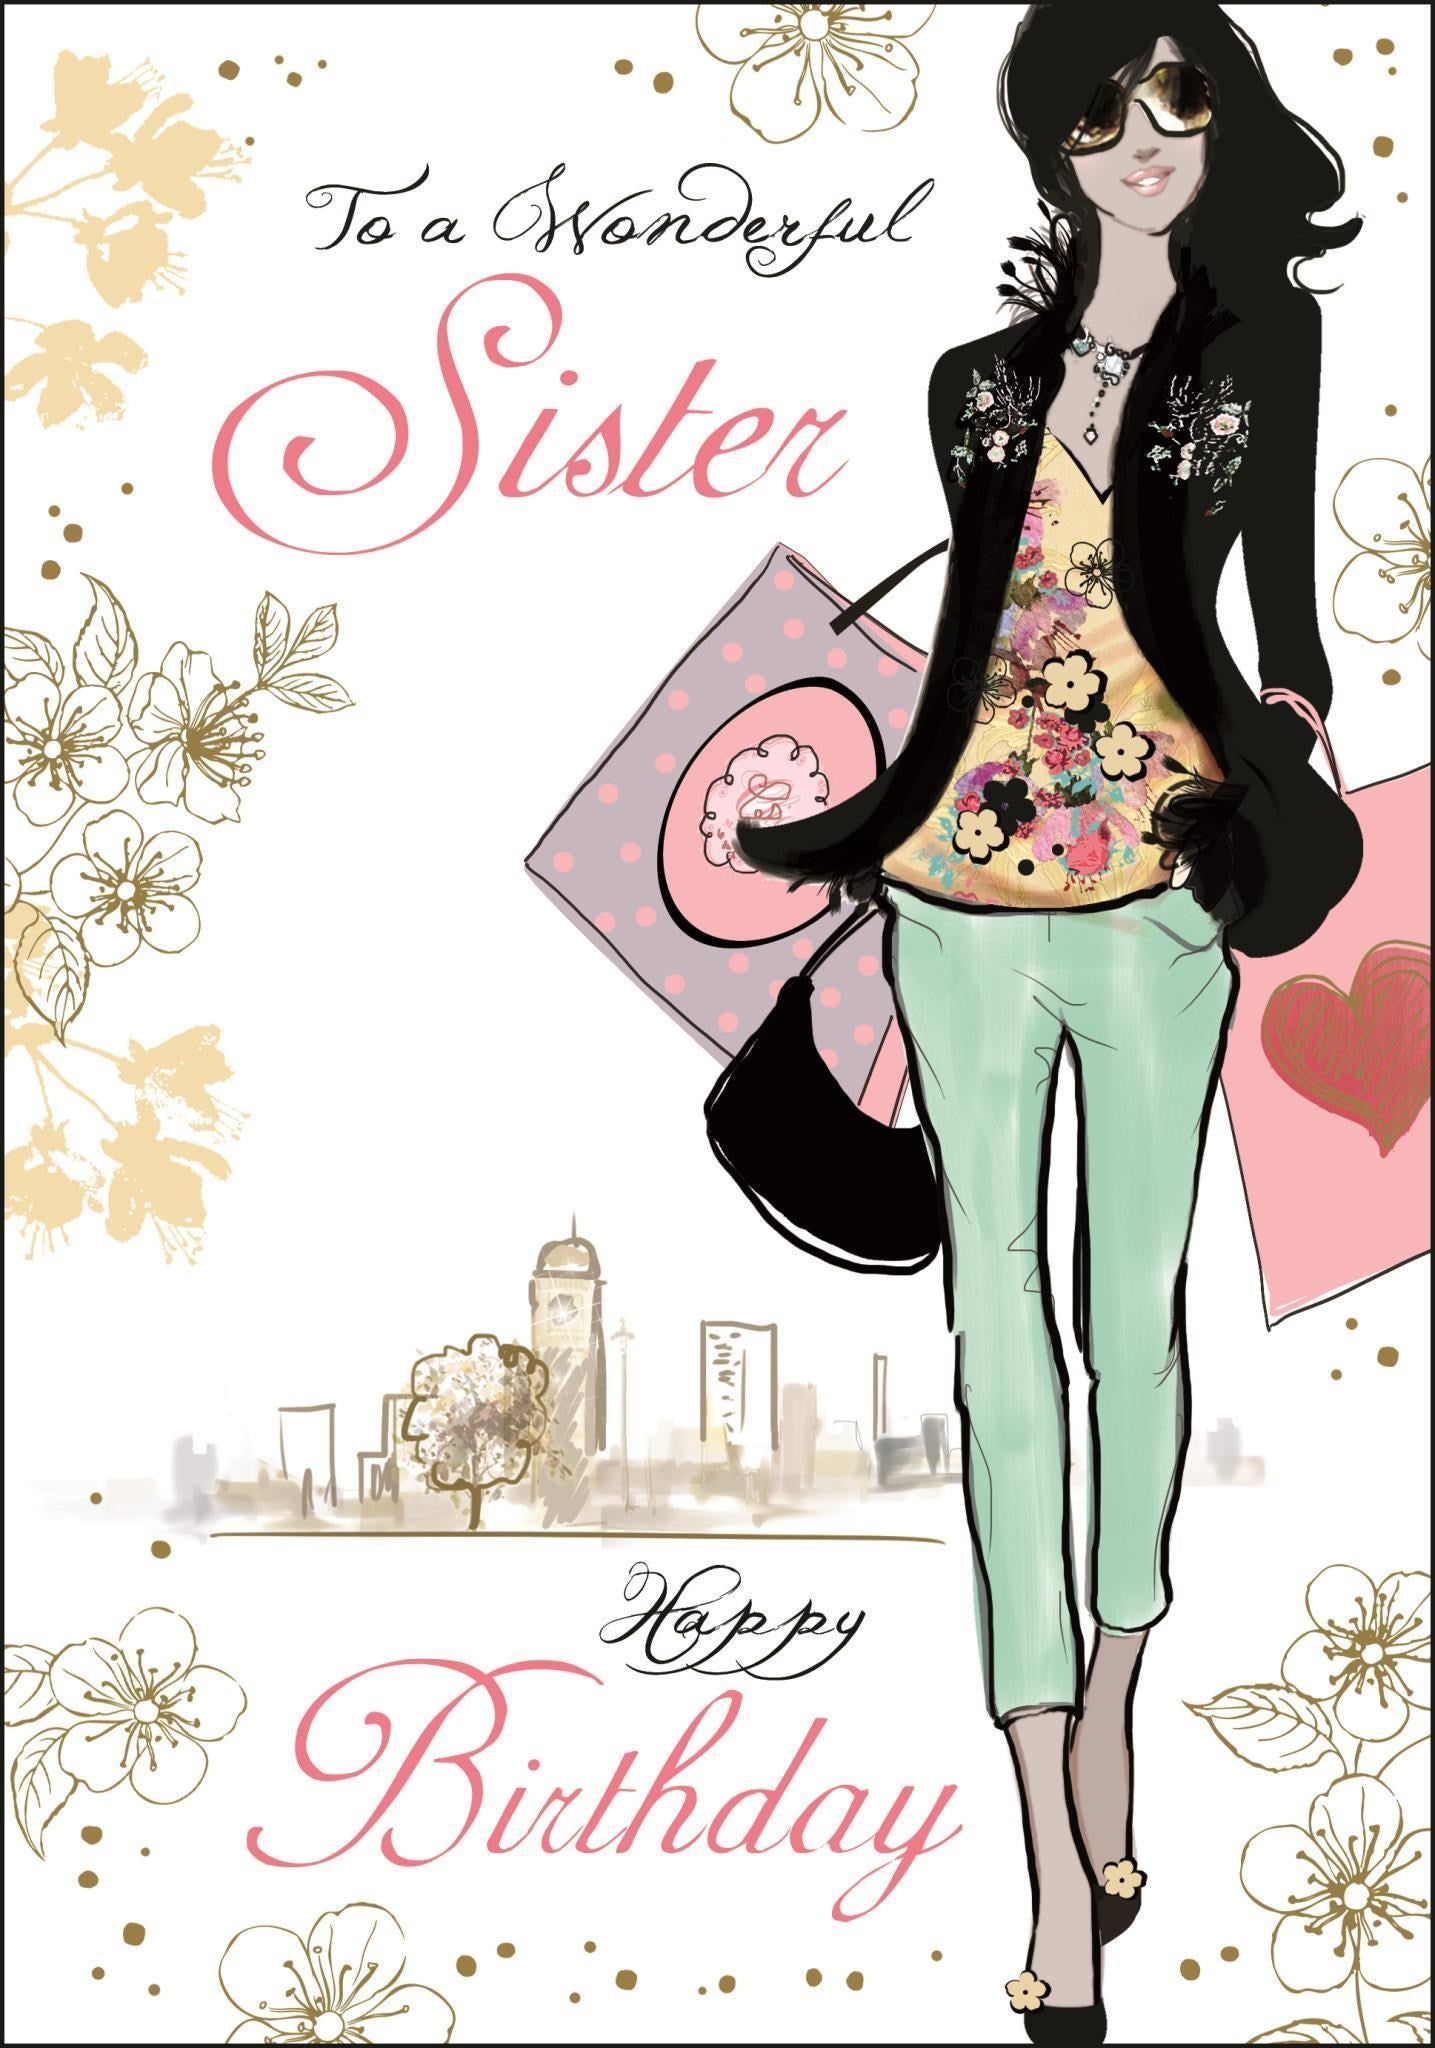 Sister Birthday Card - Suave And Elegant